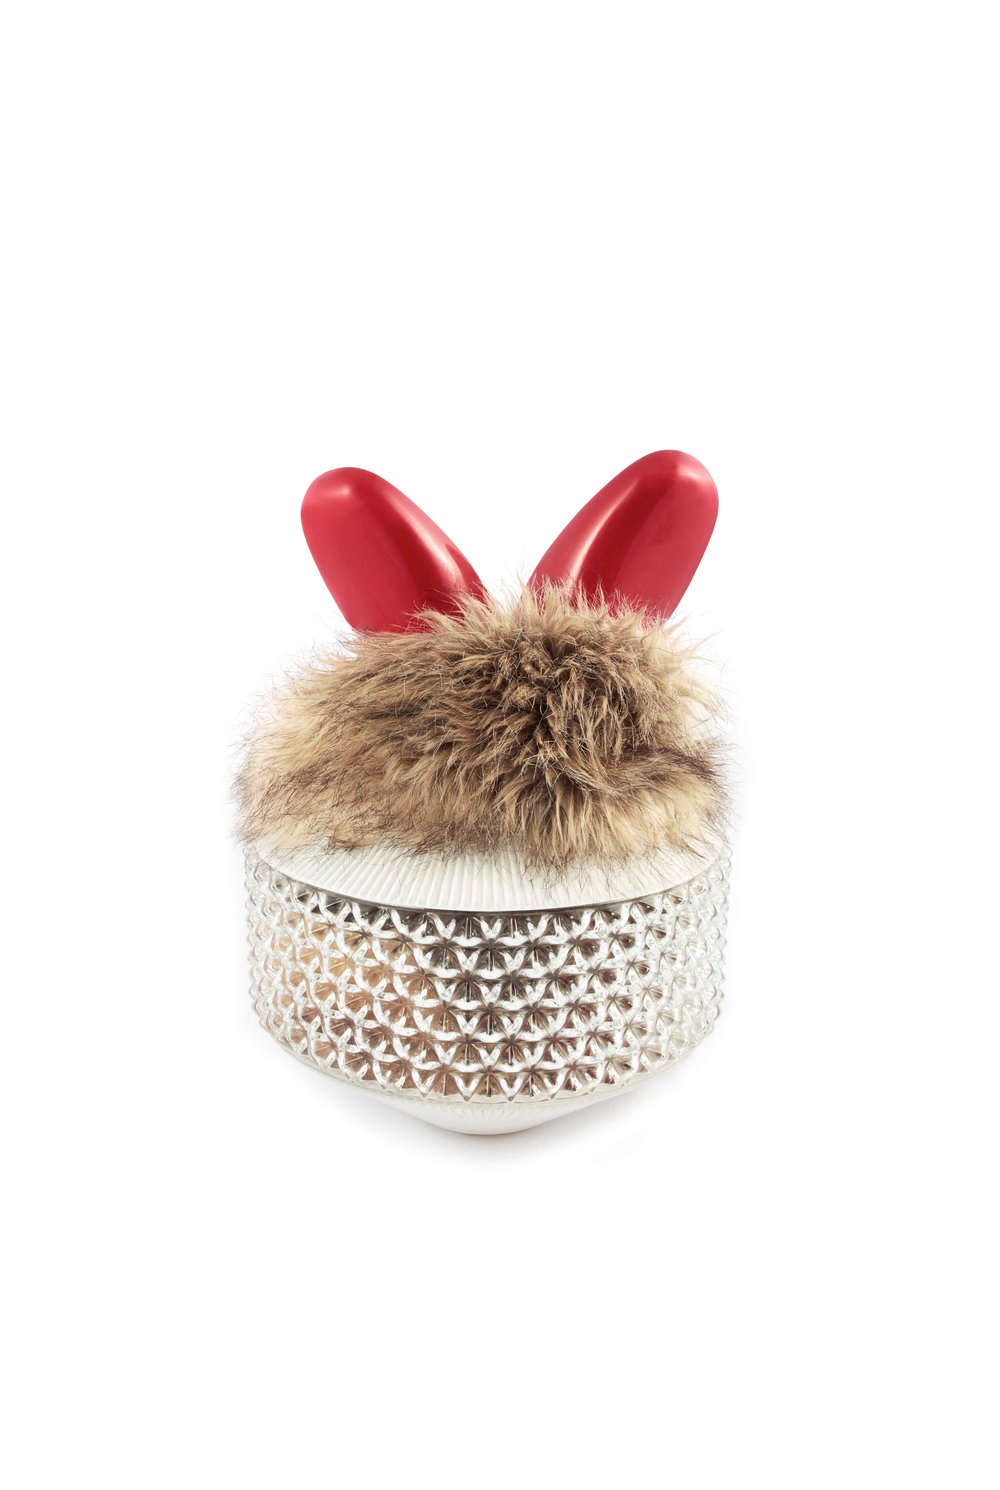 14 Sissa Micheli Museum Rhapsody – I Want to Be a Rabbit.jpg